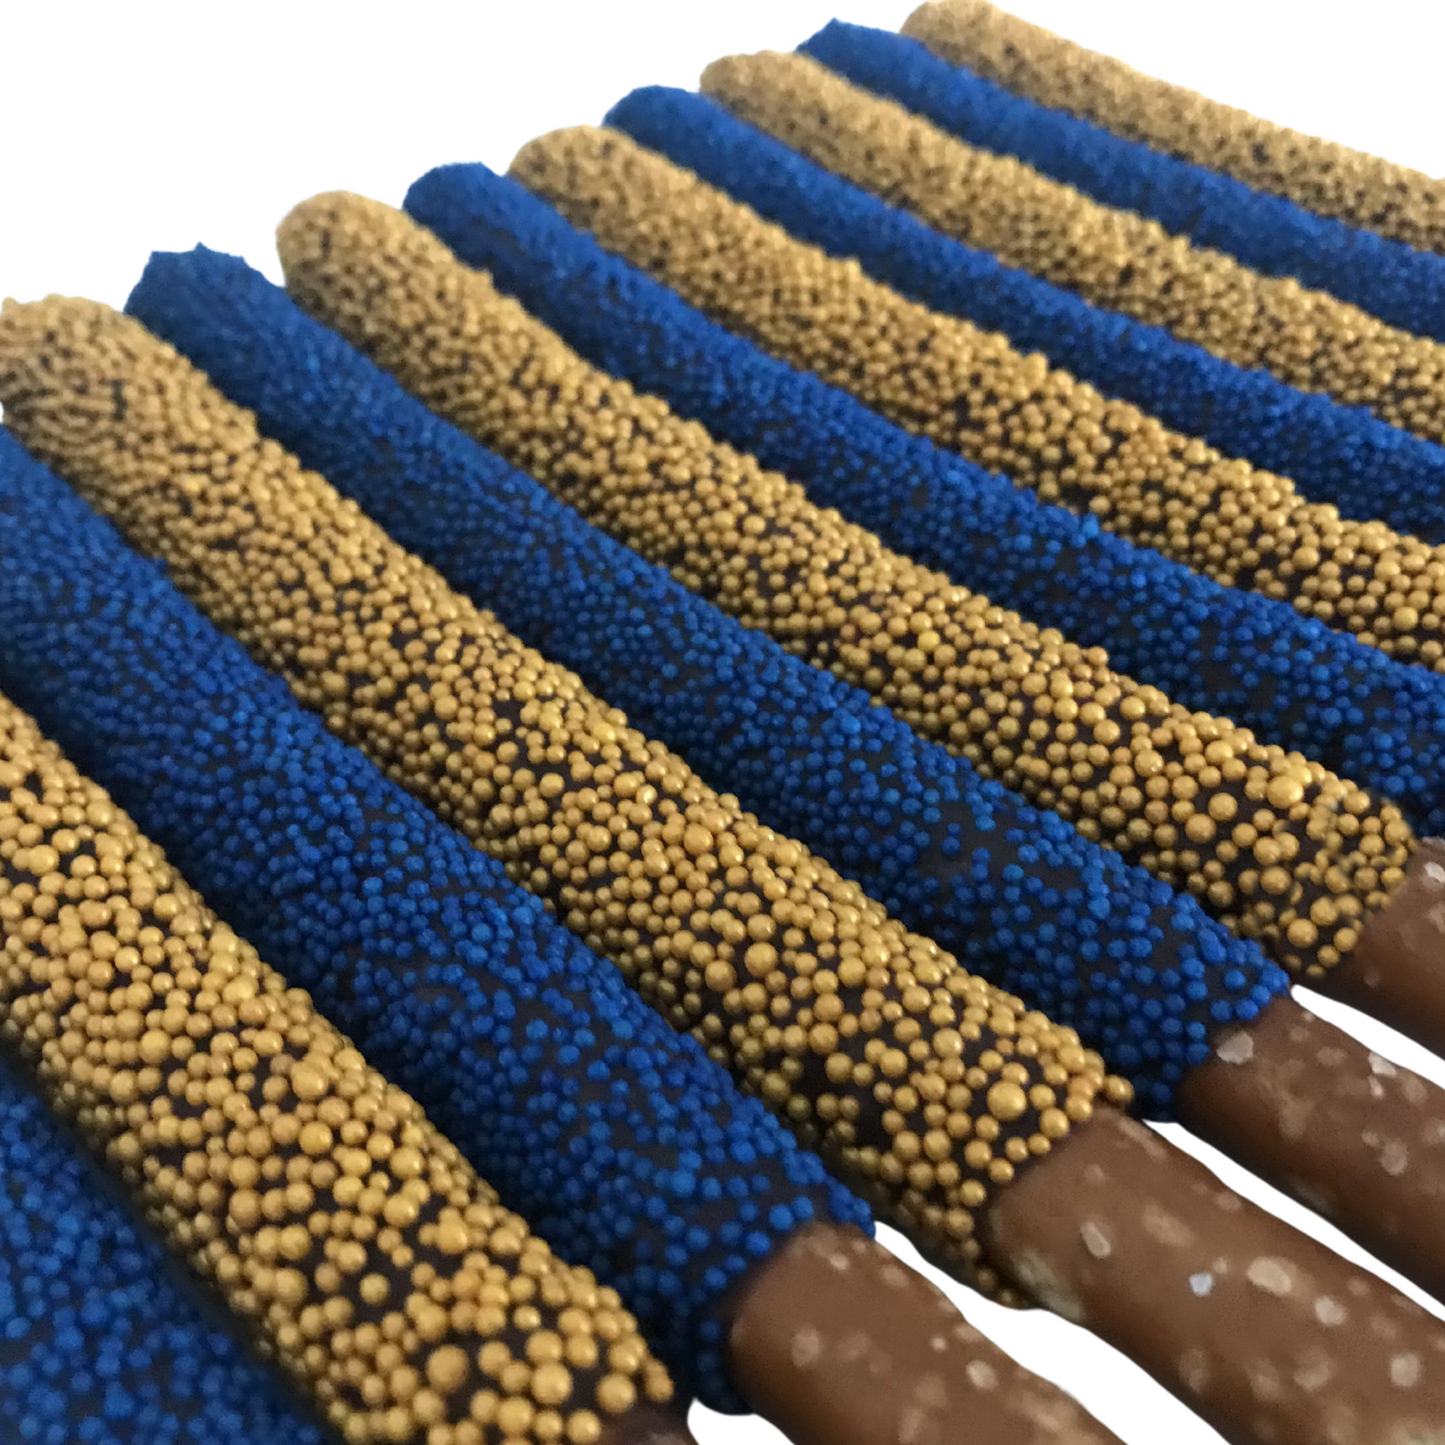 University of Michigan Chocolate Covered Pretzel Rods